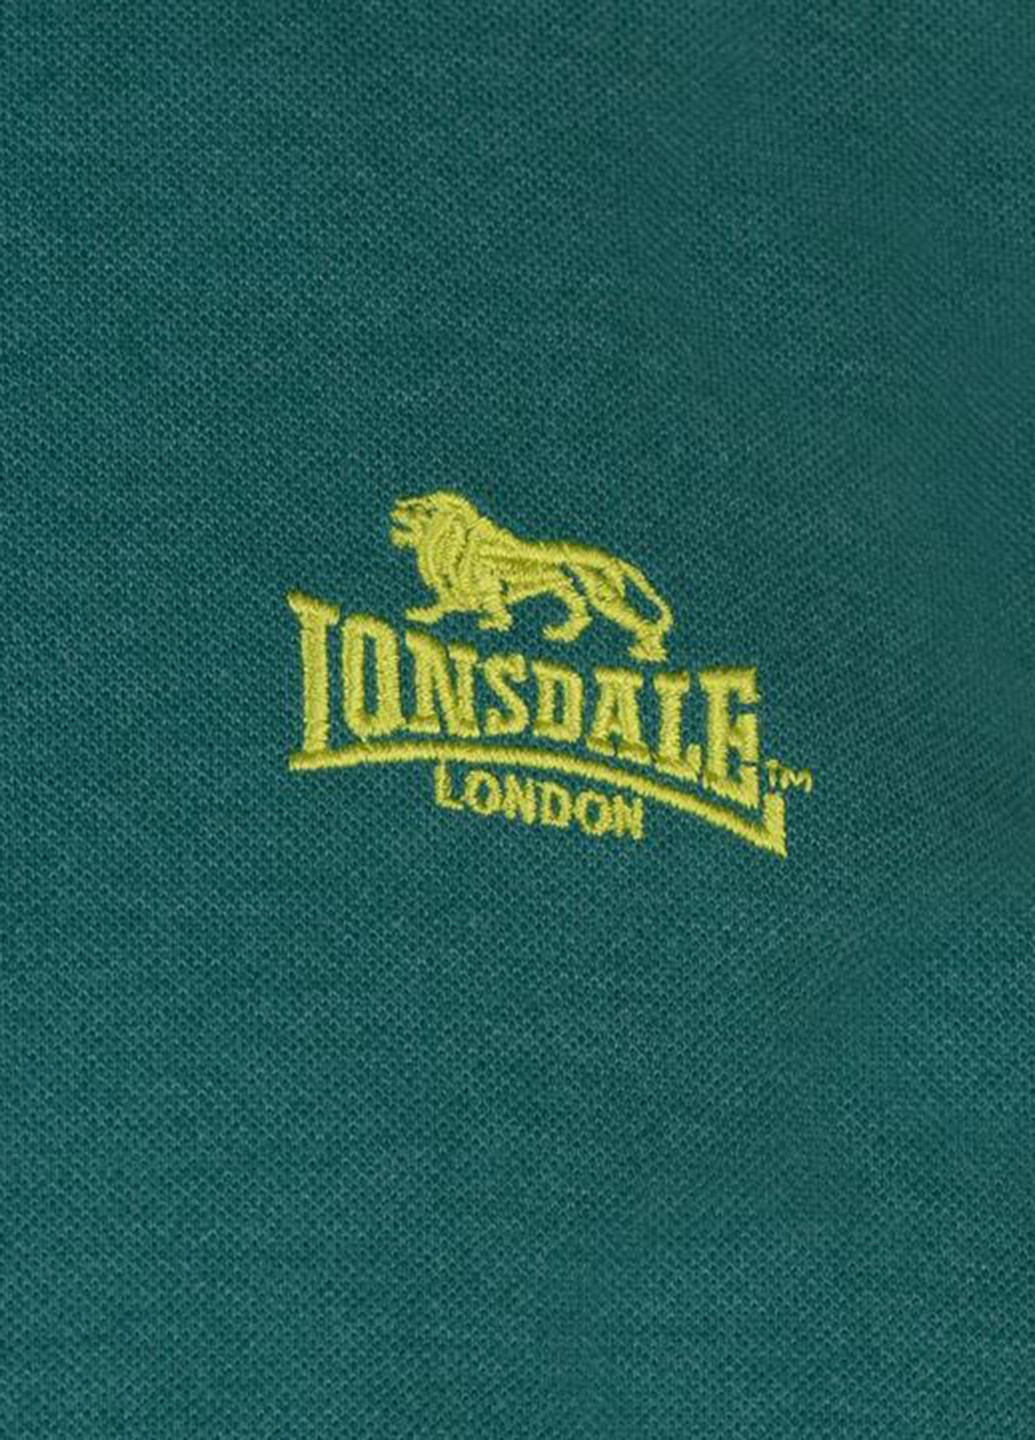 Темно-зеленая футболка-поло для мужчин Lonsdale с логотипом